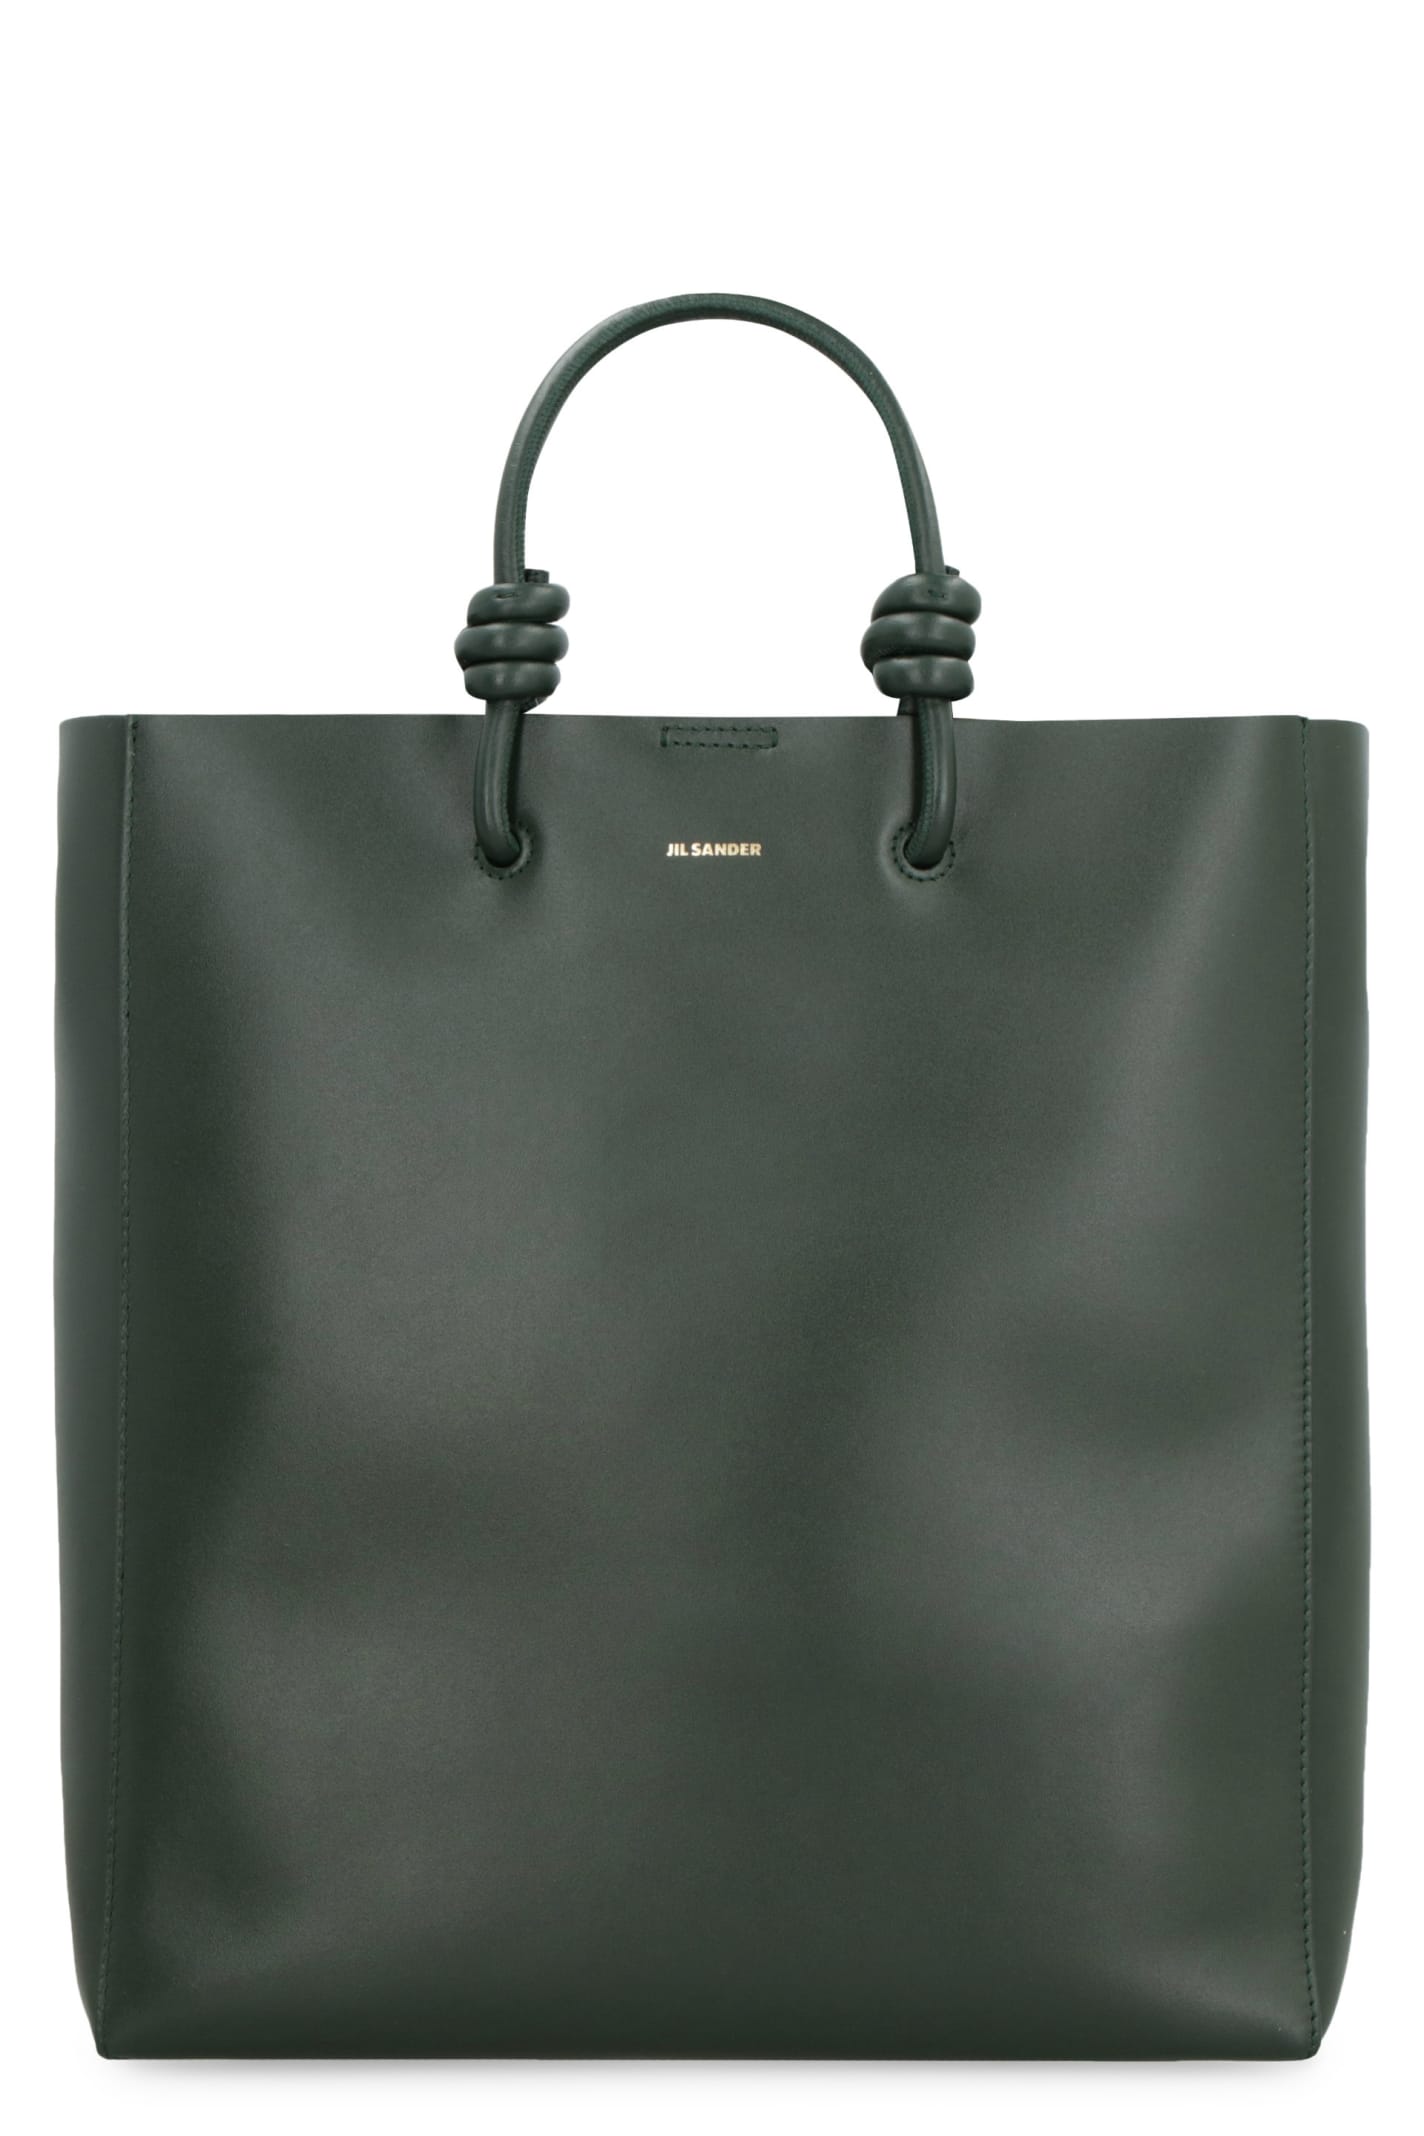 Jil Sander Leather Bags in Nero Black Womens Mens Bags Mens Tote bags - Save 24% 